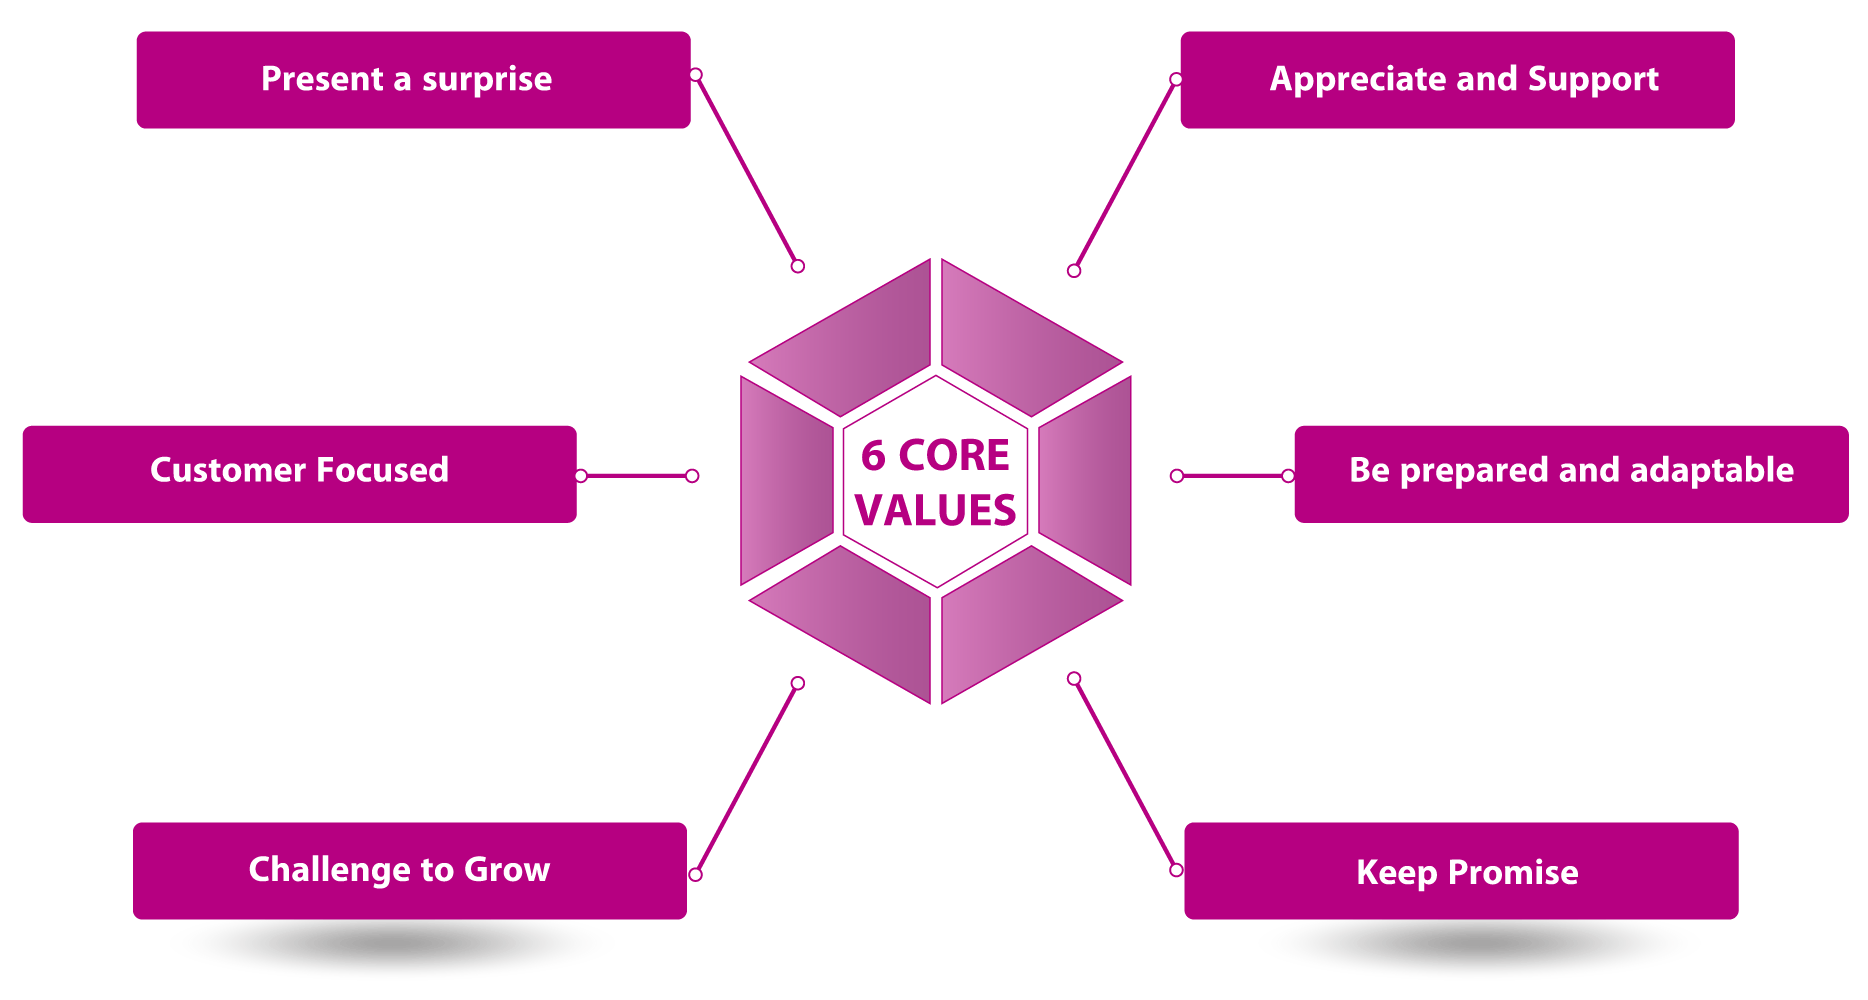 Our 6 Core Values